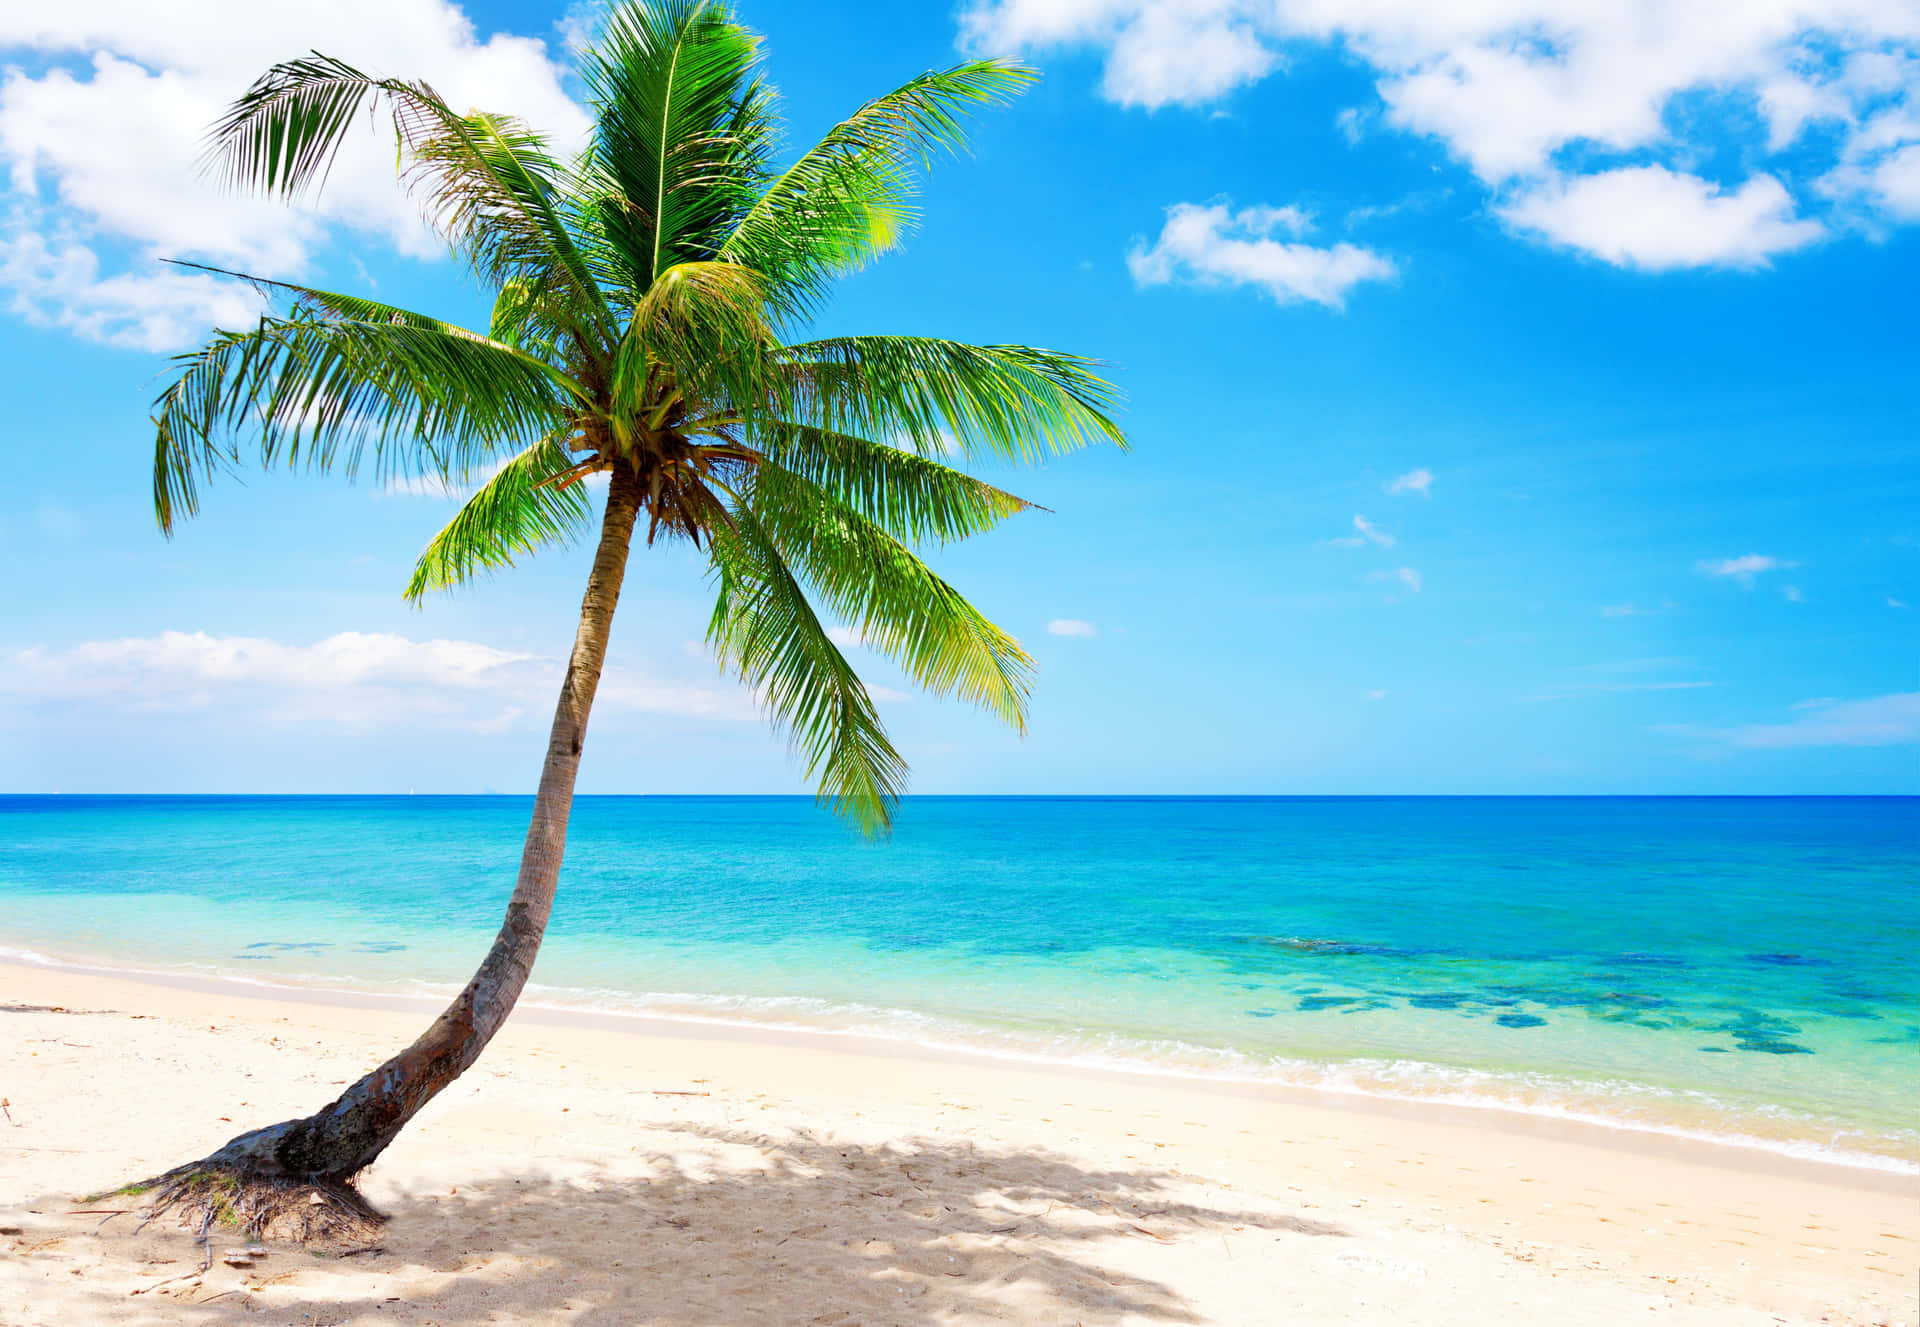 Enjoy an island paradise escape with a tropical getaway.